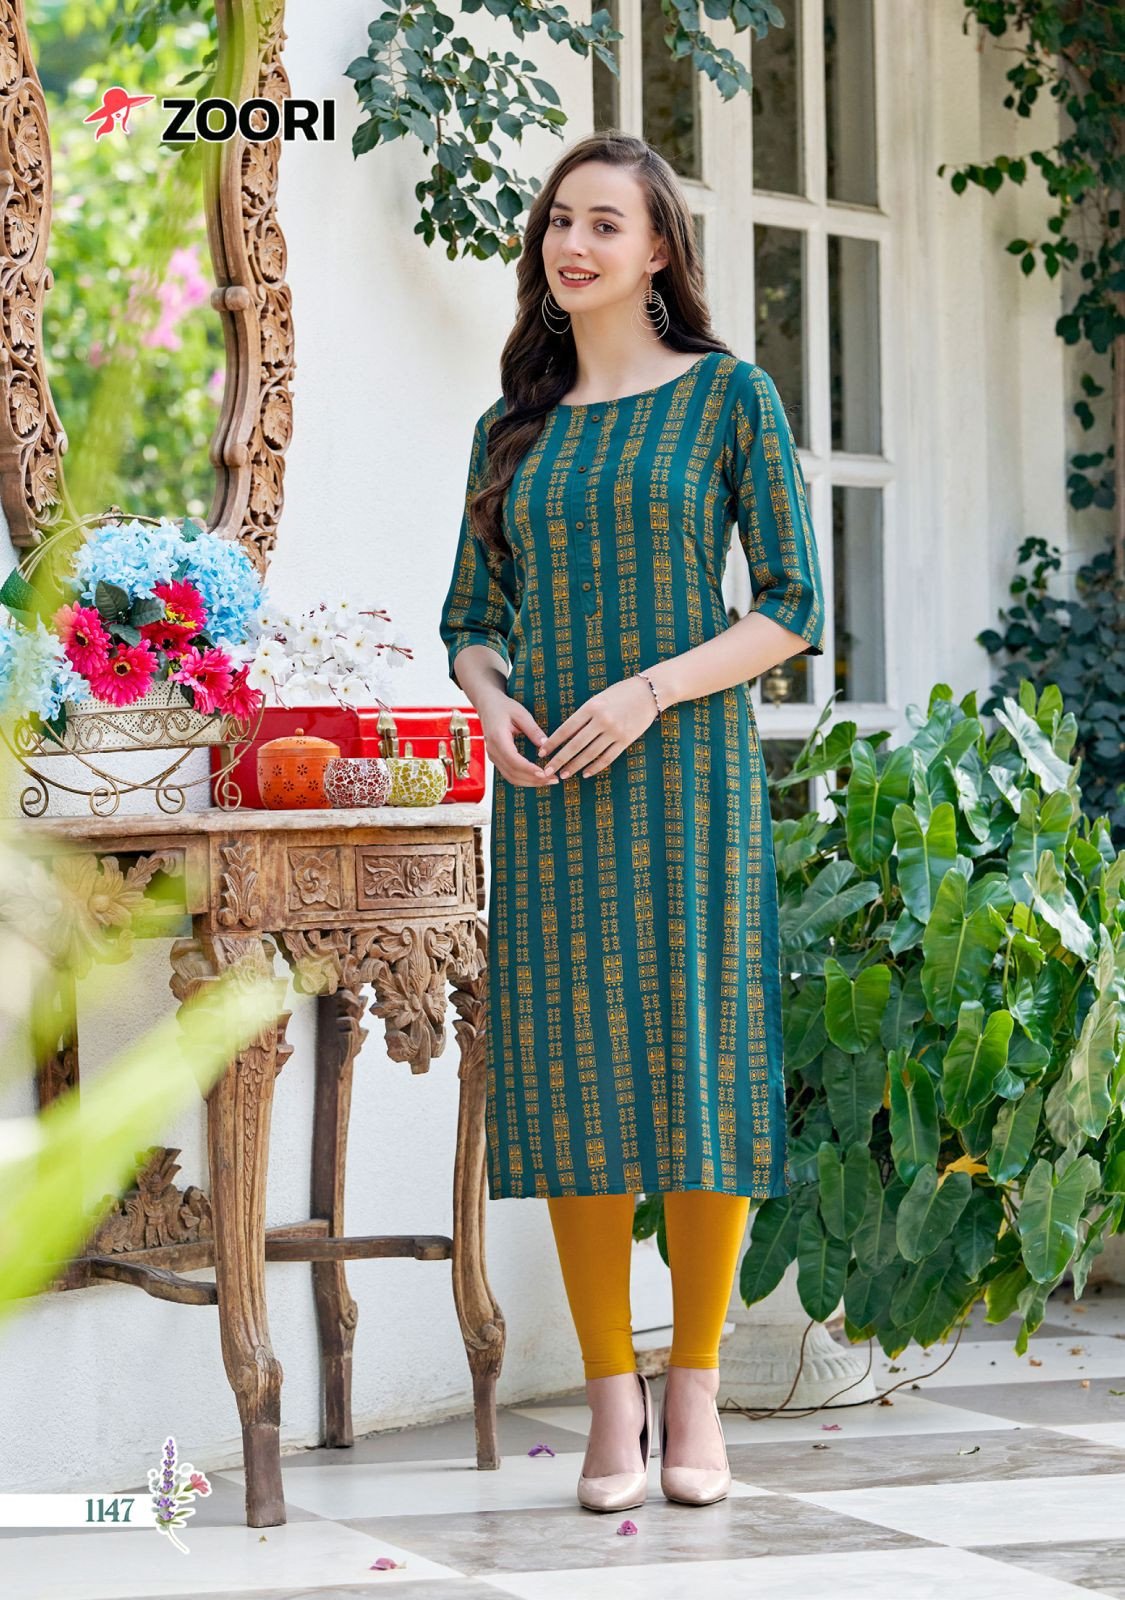 Meerali woman 1 Catalogue designer party wear Kurtis Wholesale online  supplier Surat - SM CREATION